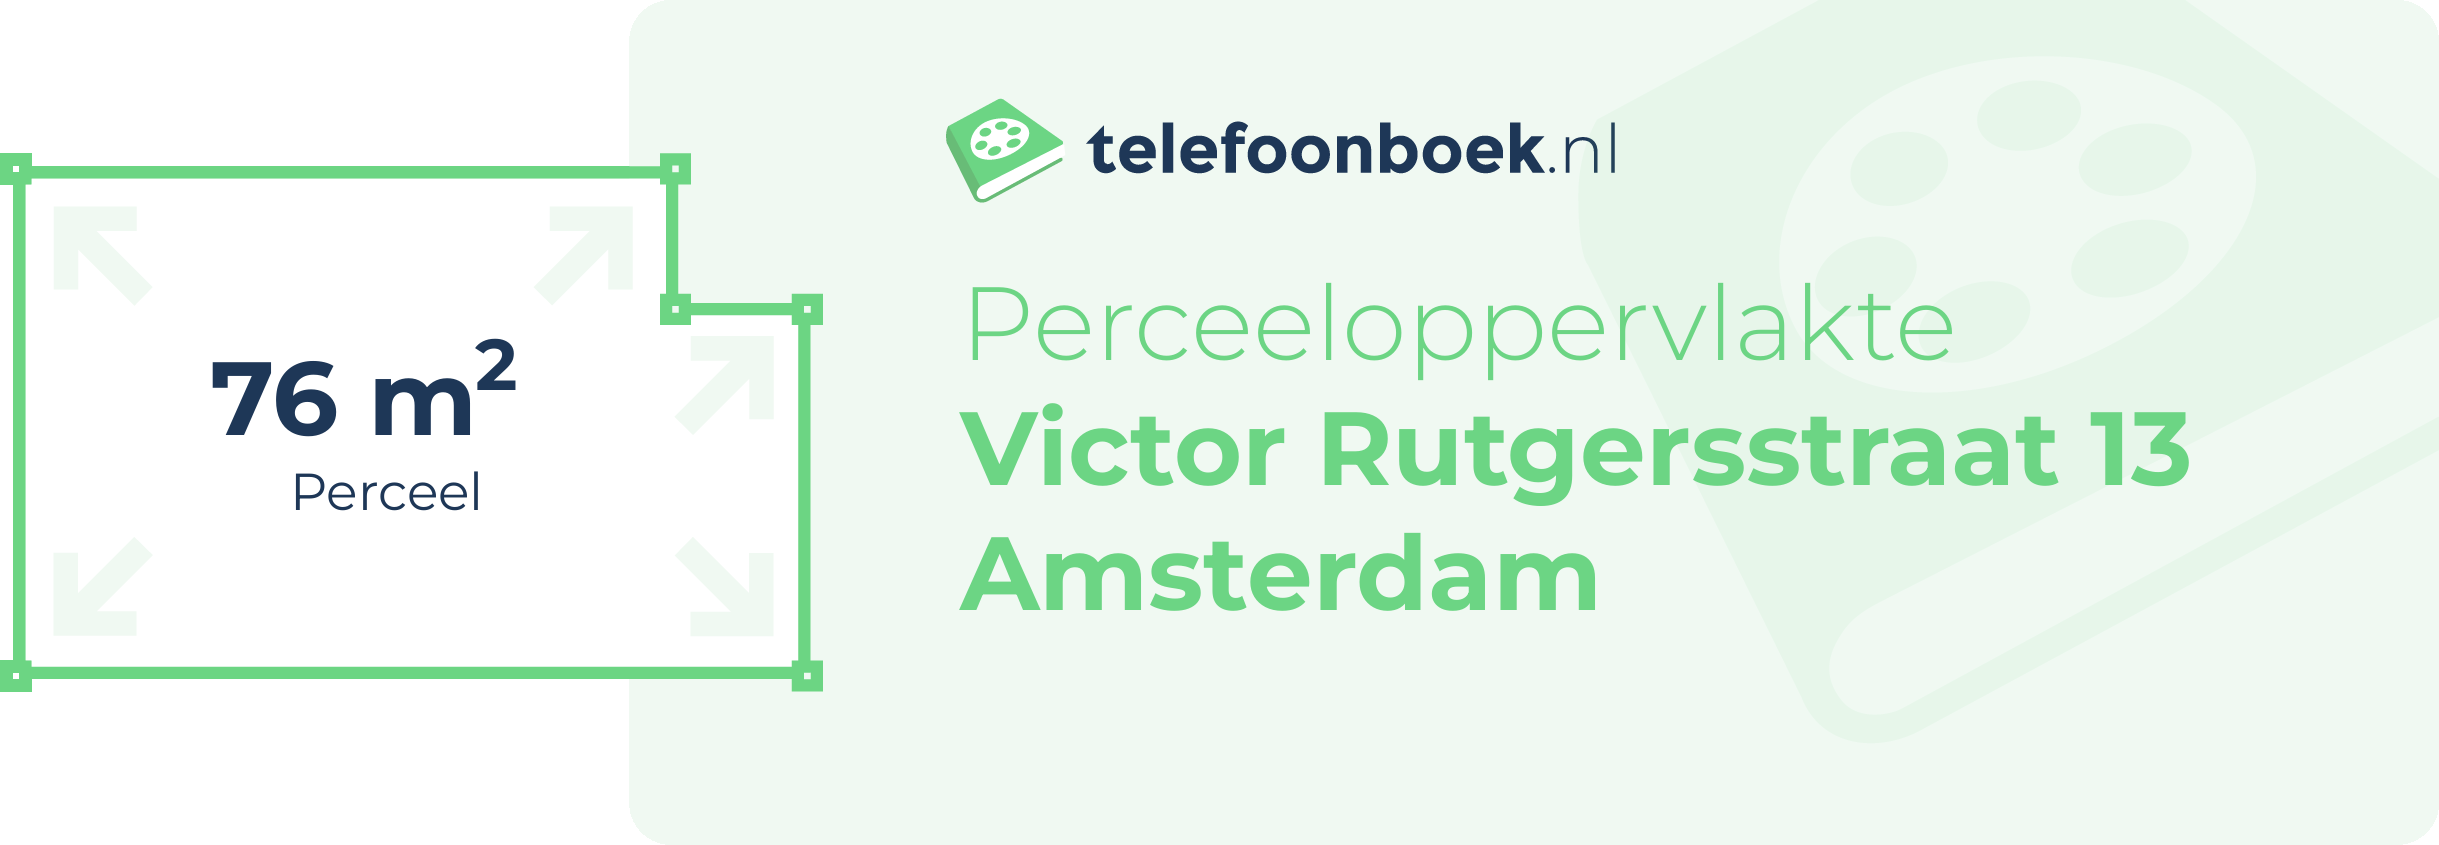 Perceeloppervlakte Victor Rutgersstraat 13 Amsterdam